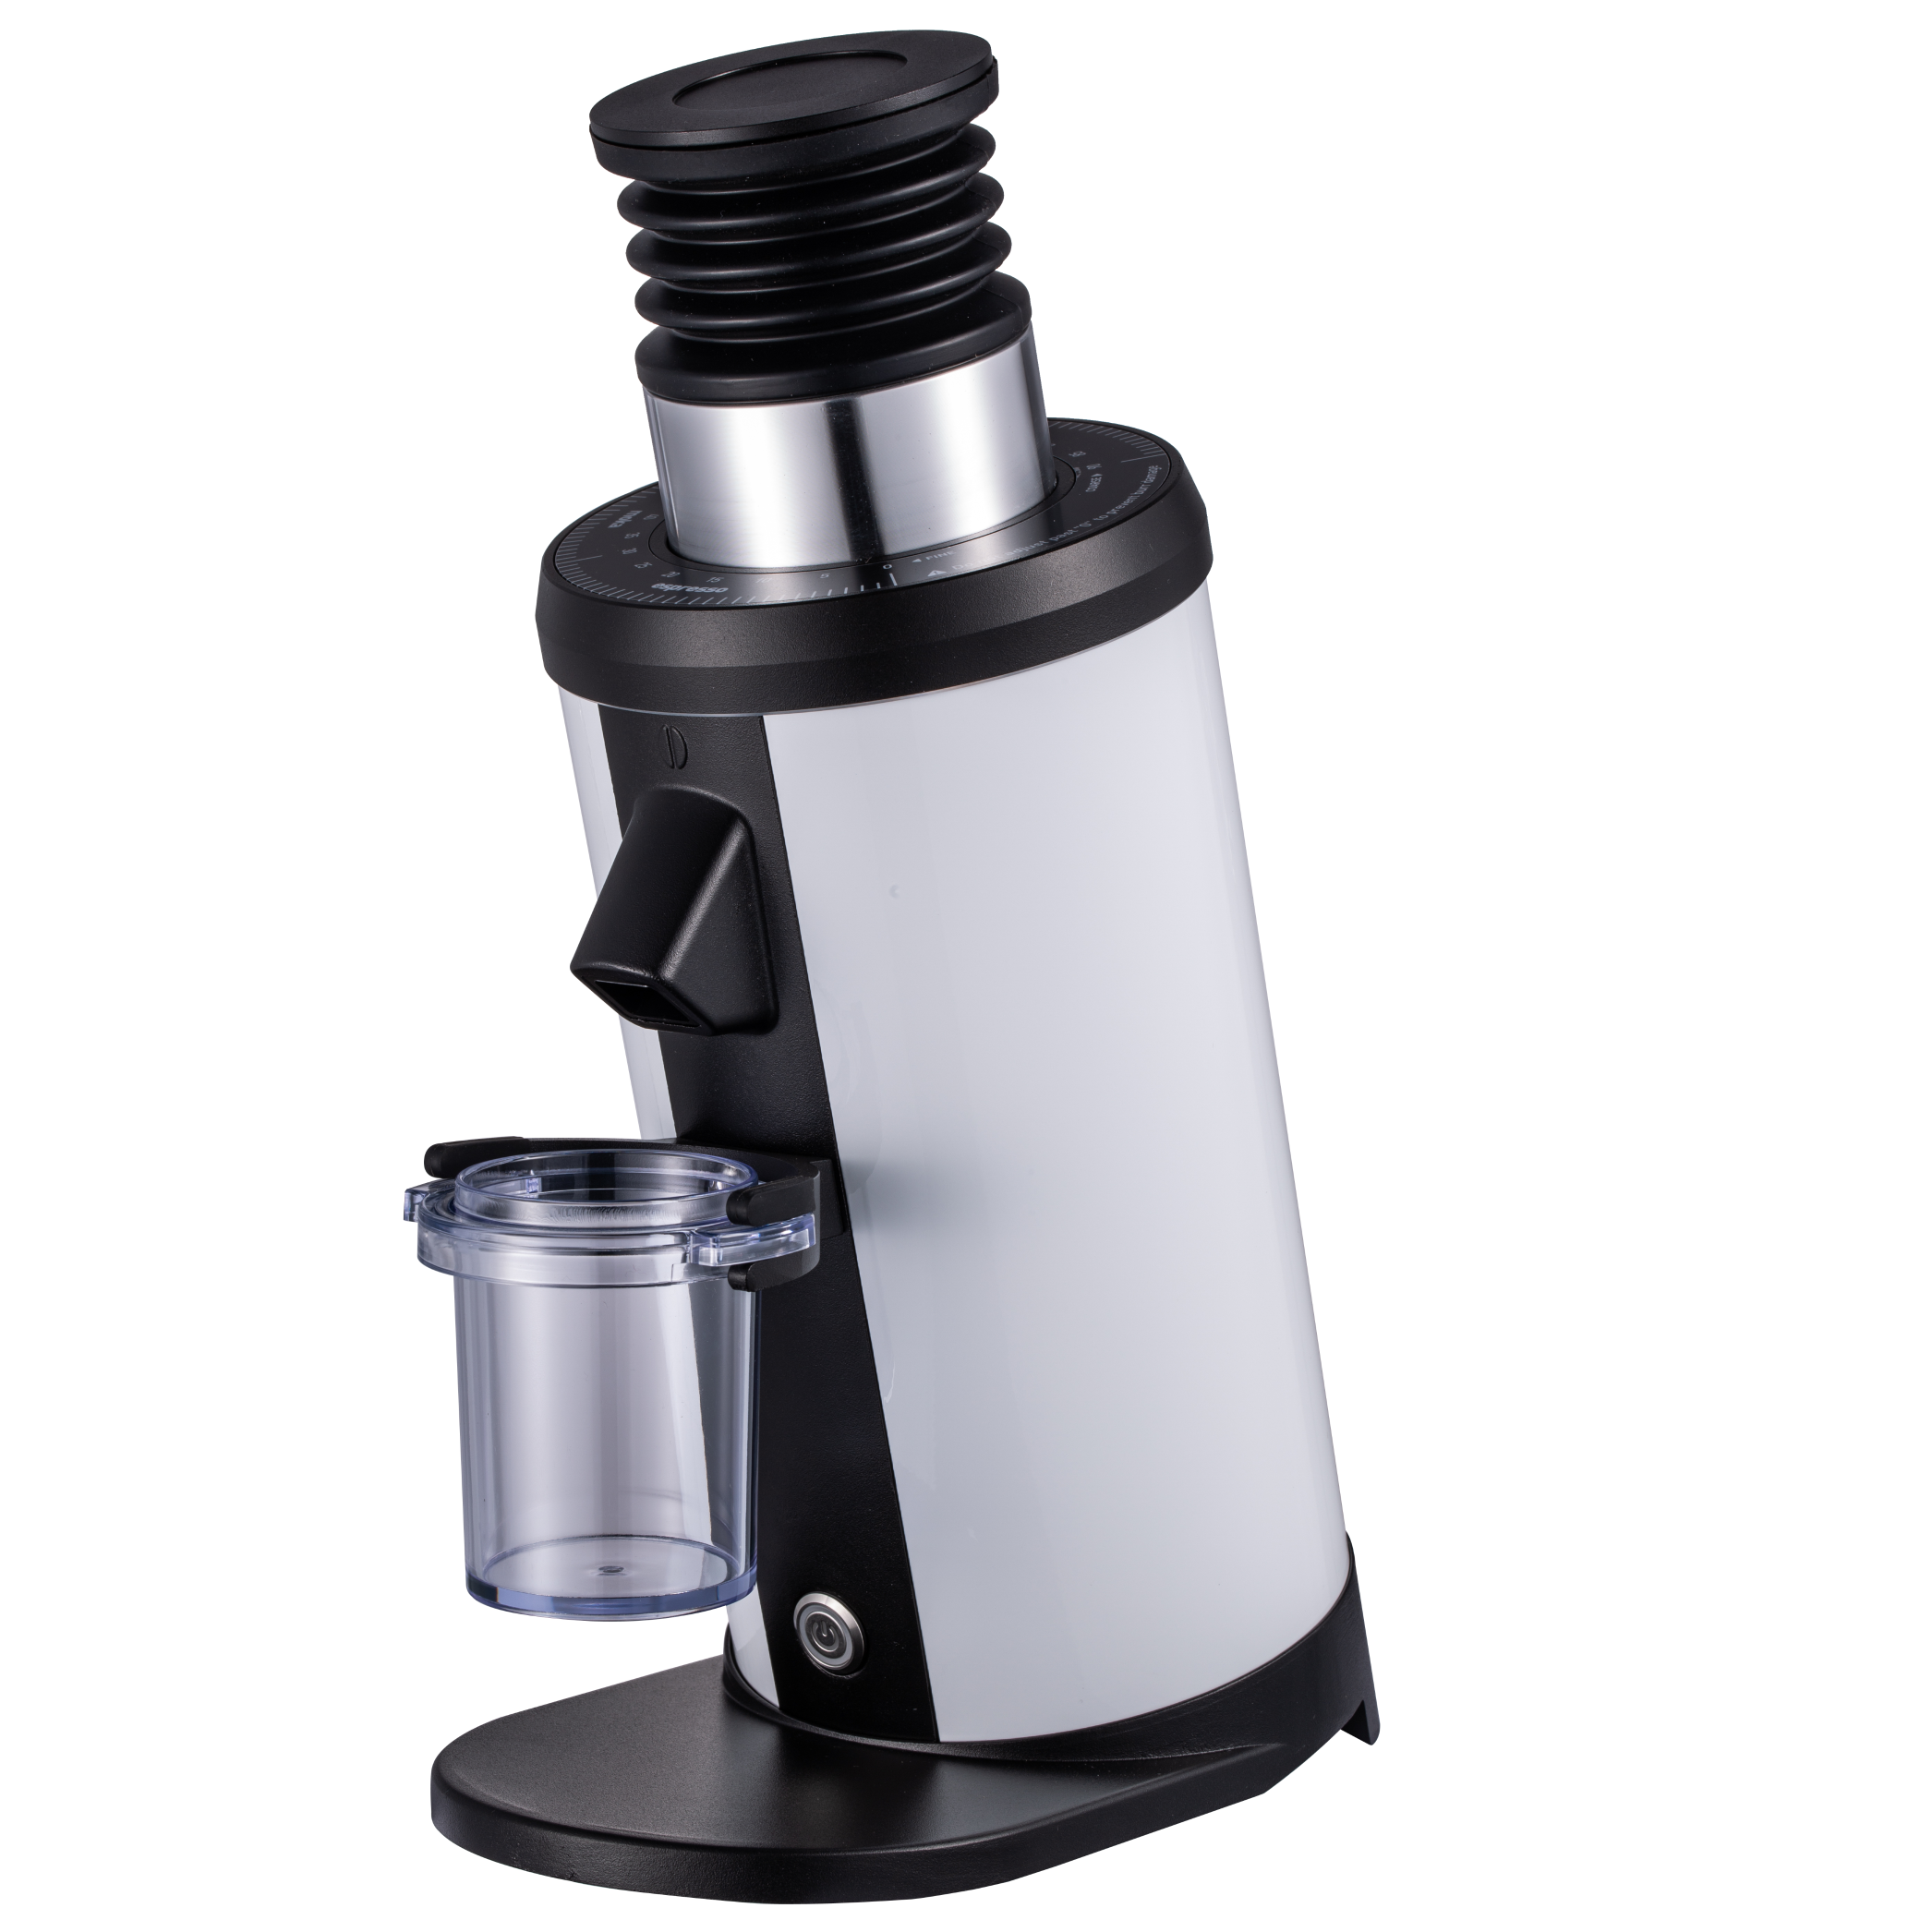 DF64 single dose grinder in white